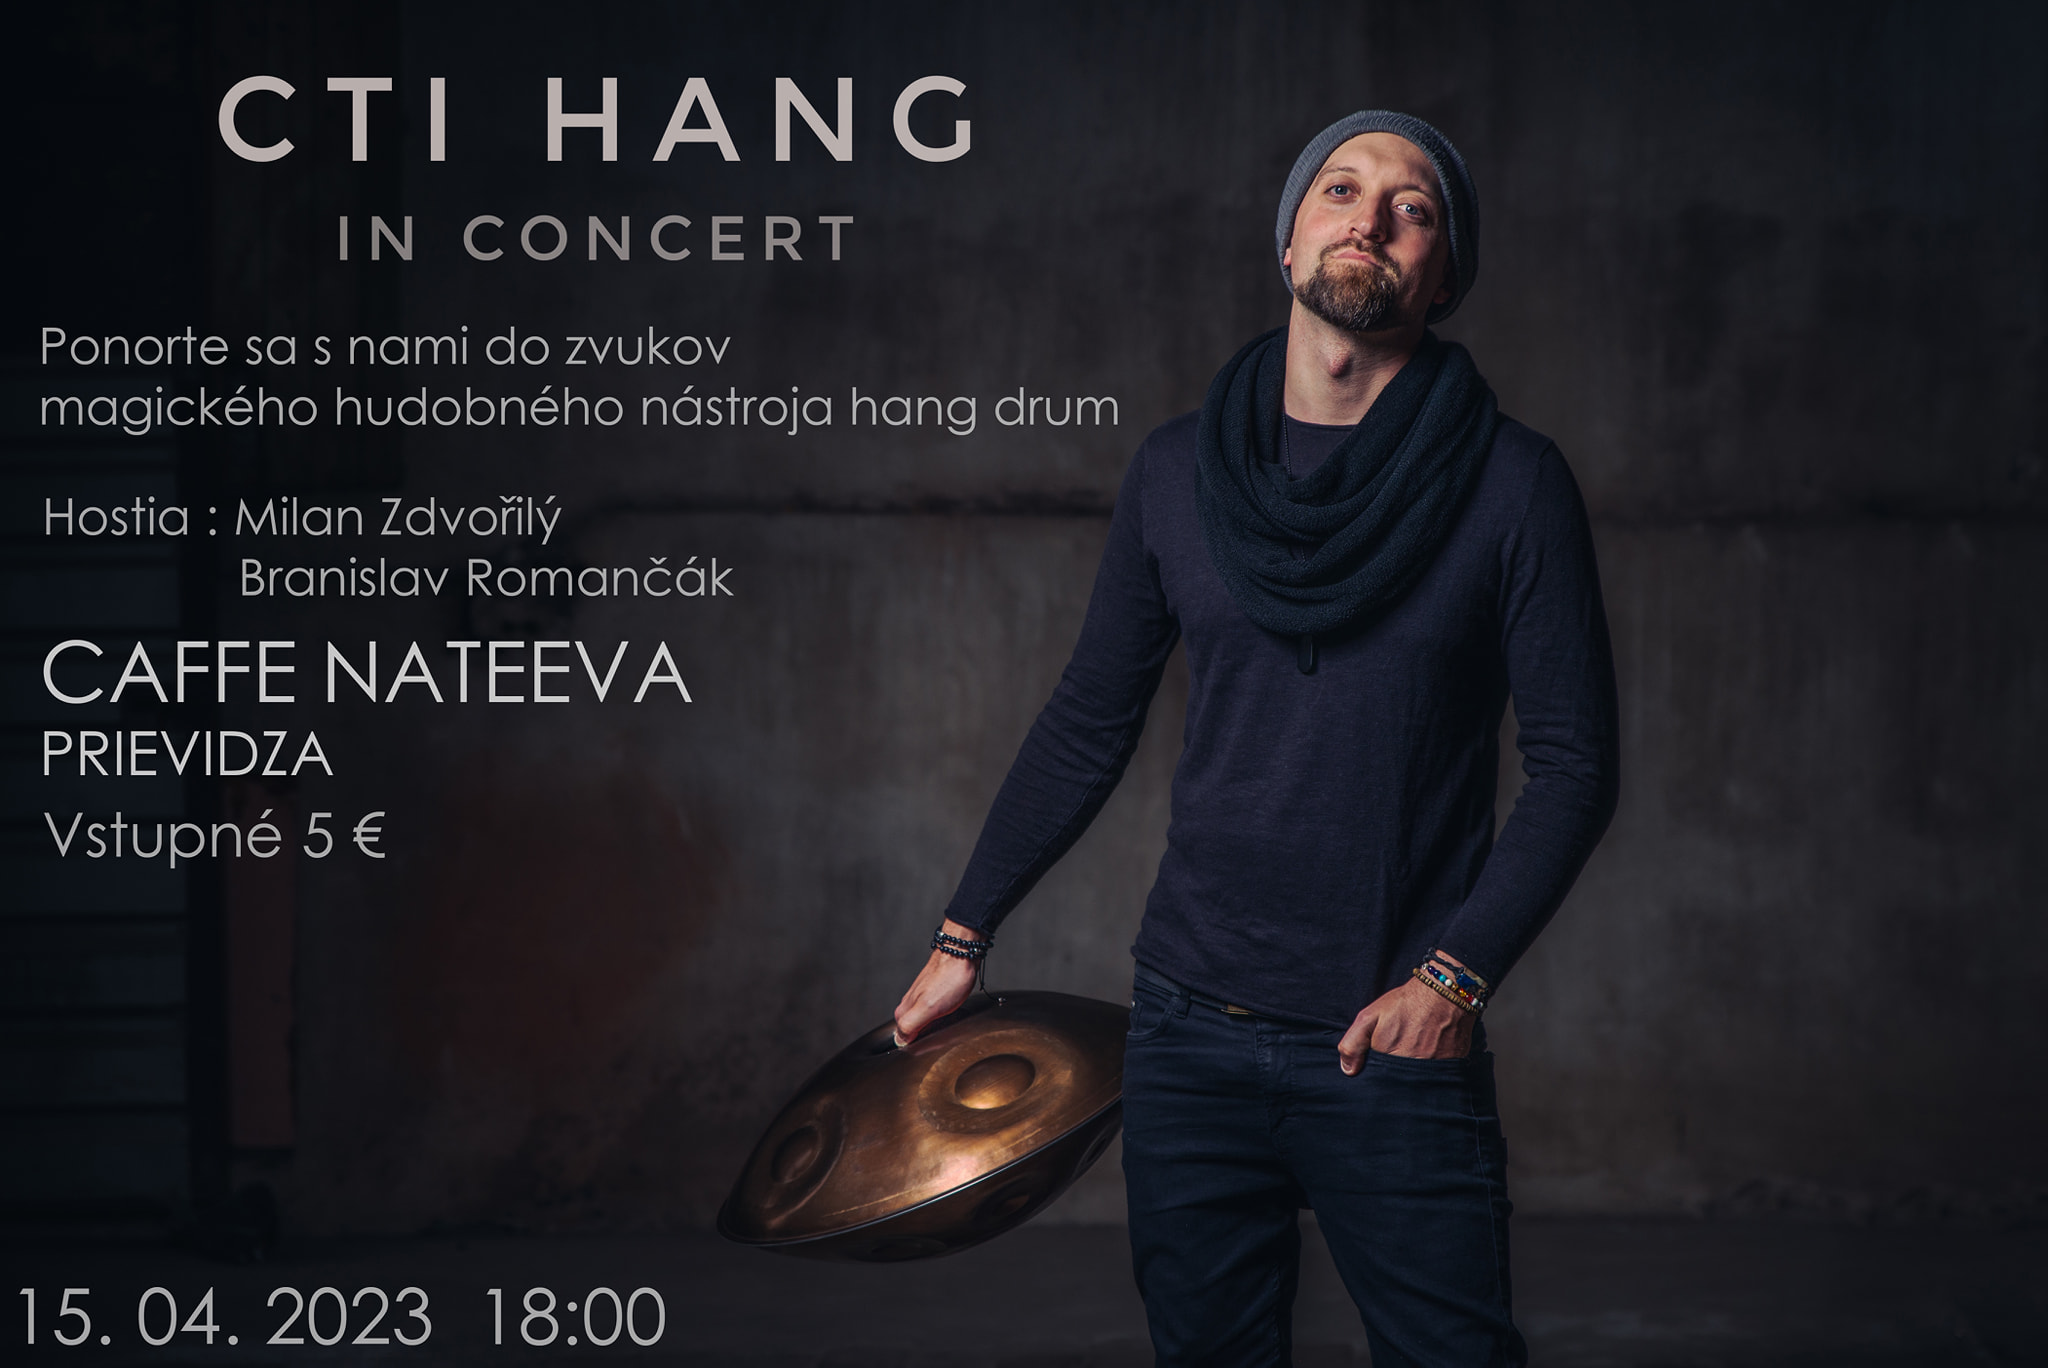 Hang drum koncert Cafe Nateeva